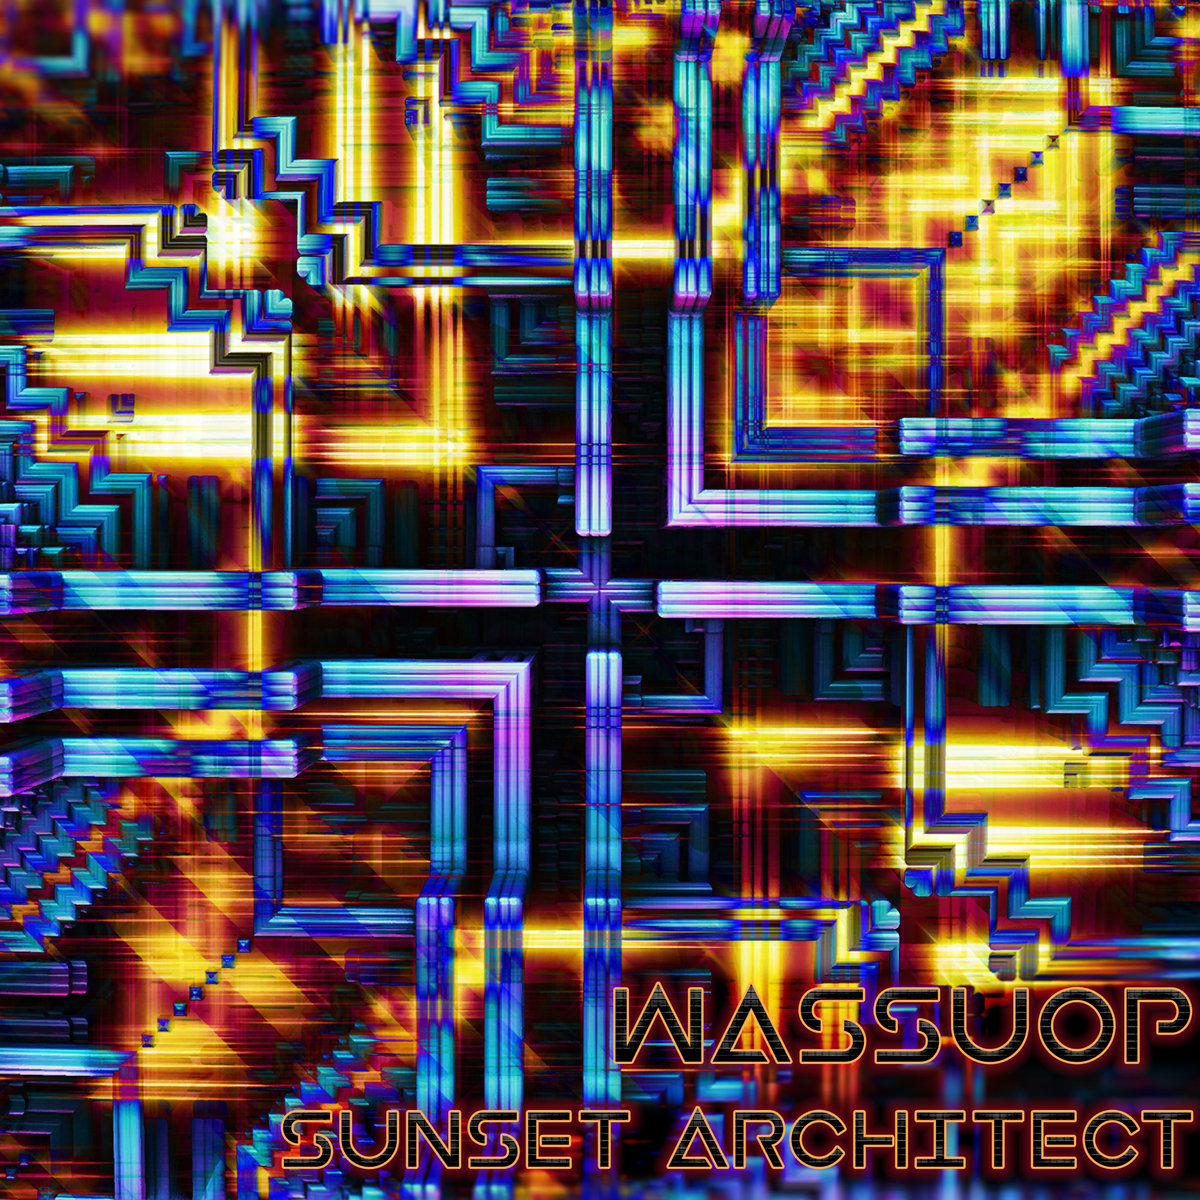 Duffrey - Third Eye Vision (wassuop Remix) @ 'Sunset Architect' album (bass, electronic)